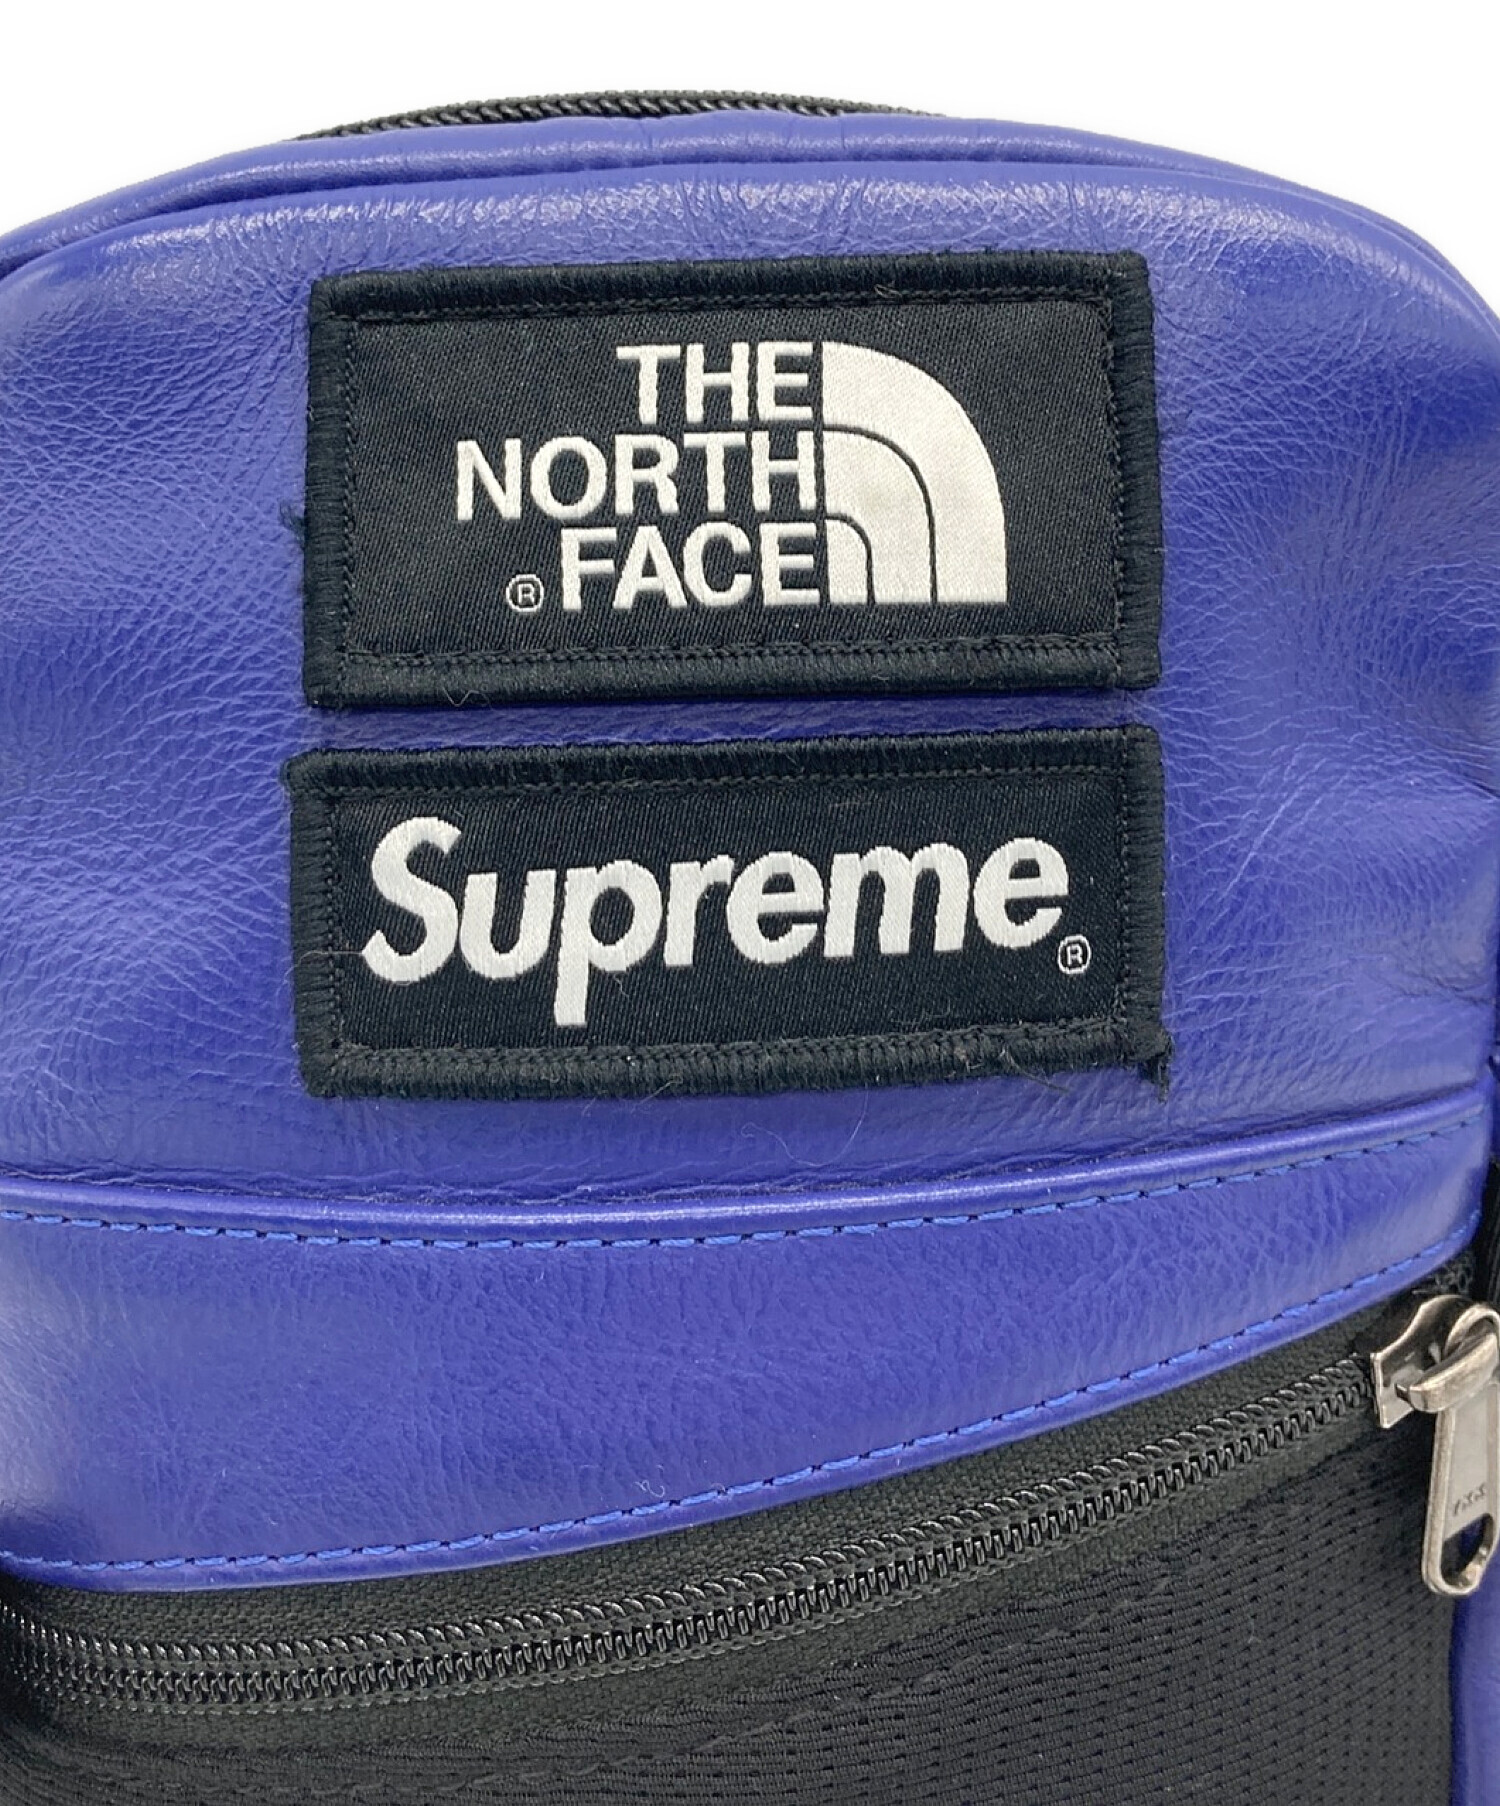 SUPREME×THE NORTH FACE (シュプリーム × ザノースフェイス) 18AW Leather Shoulder Bag パープル